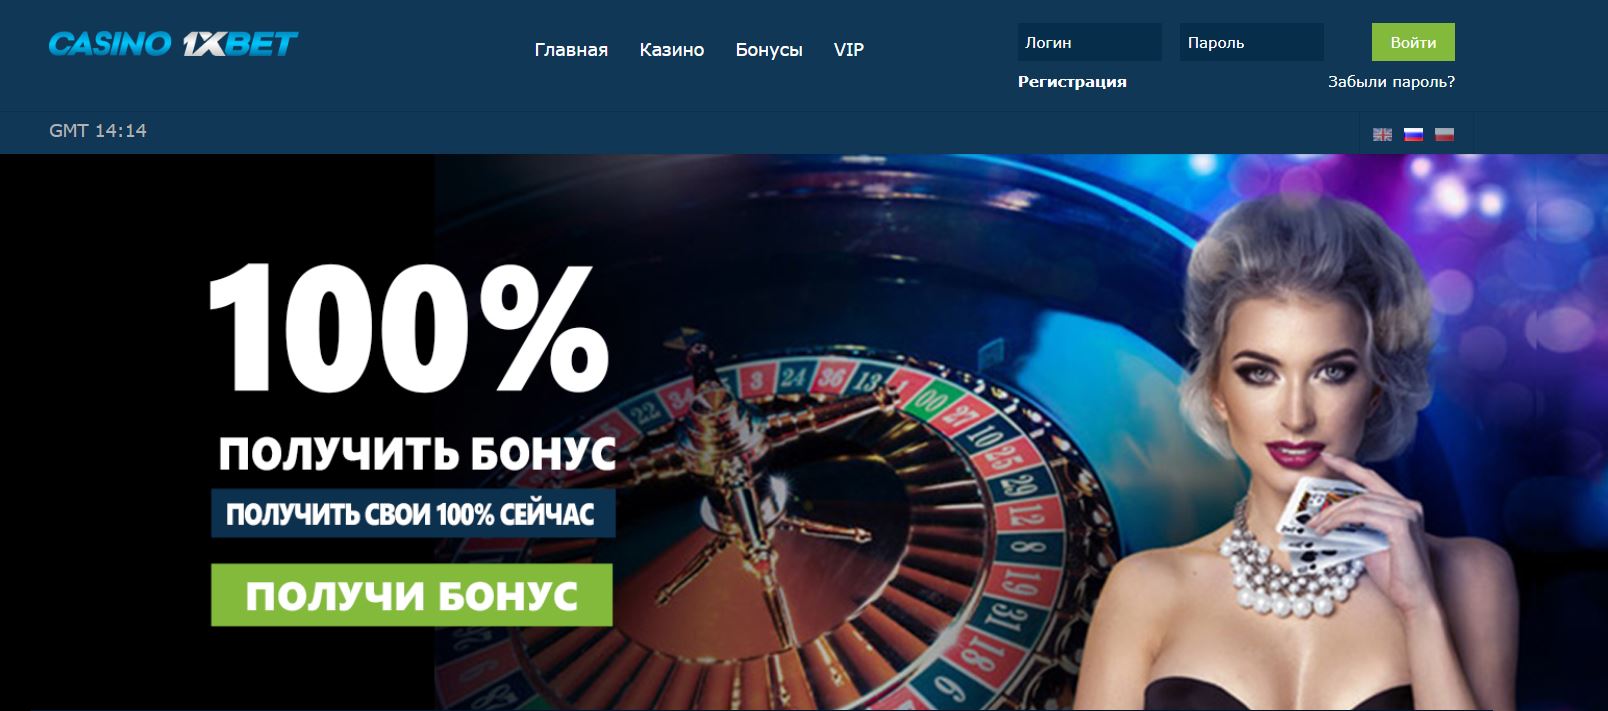 milionbet casino приложение